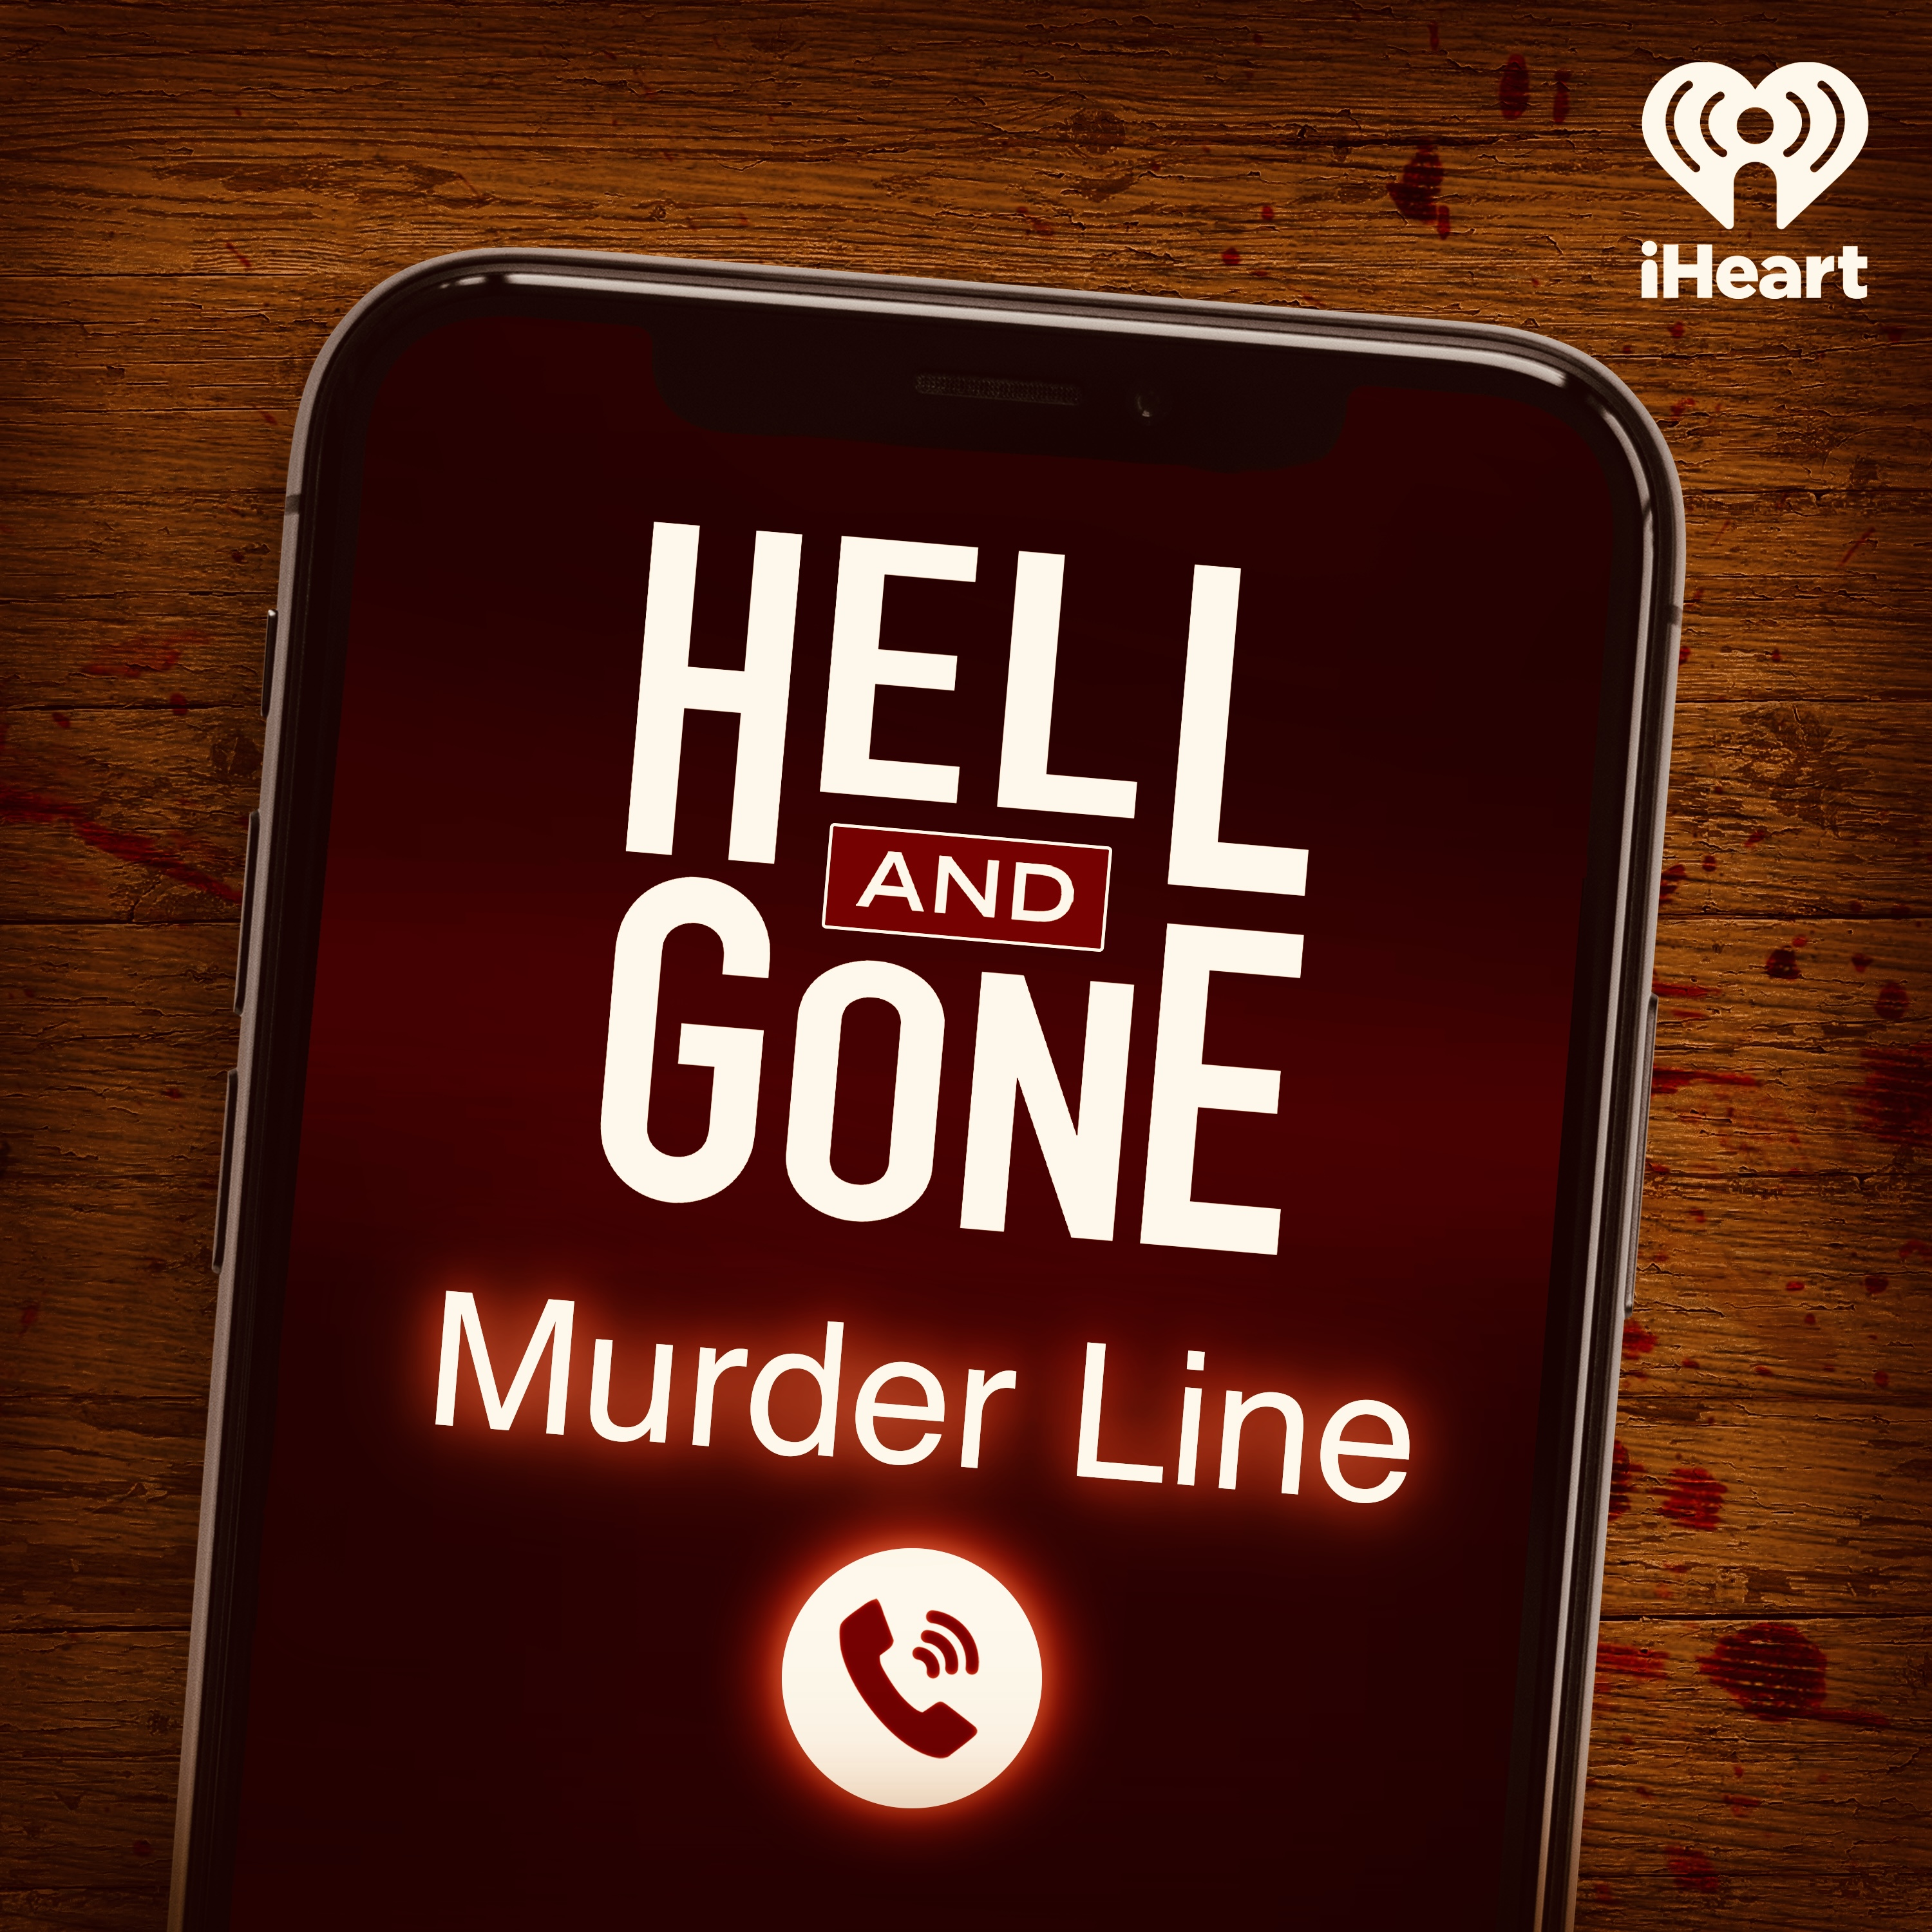 Hell and Gone Murder Line: Robert Wayne Cox